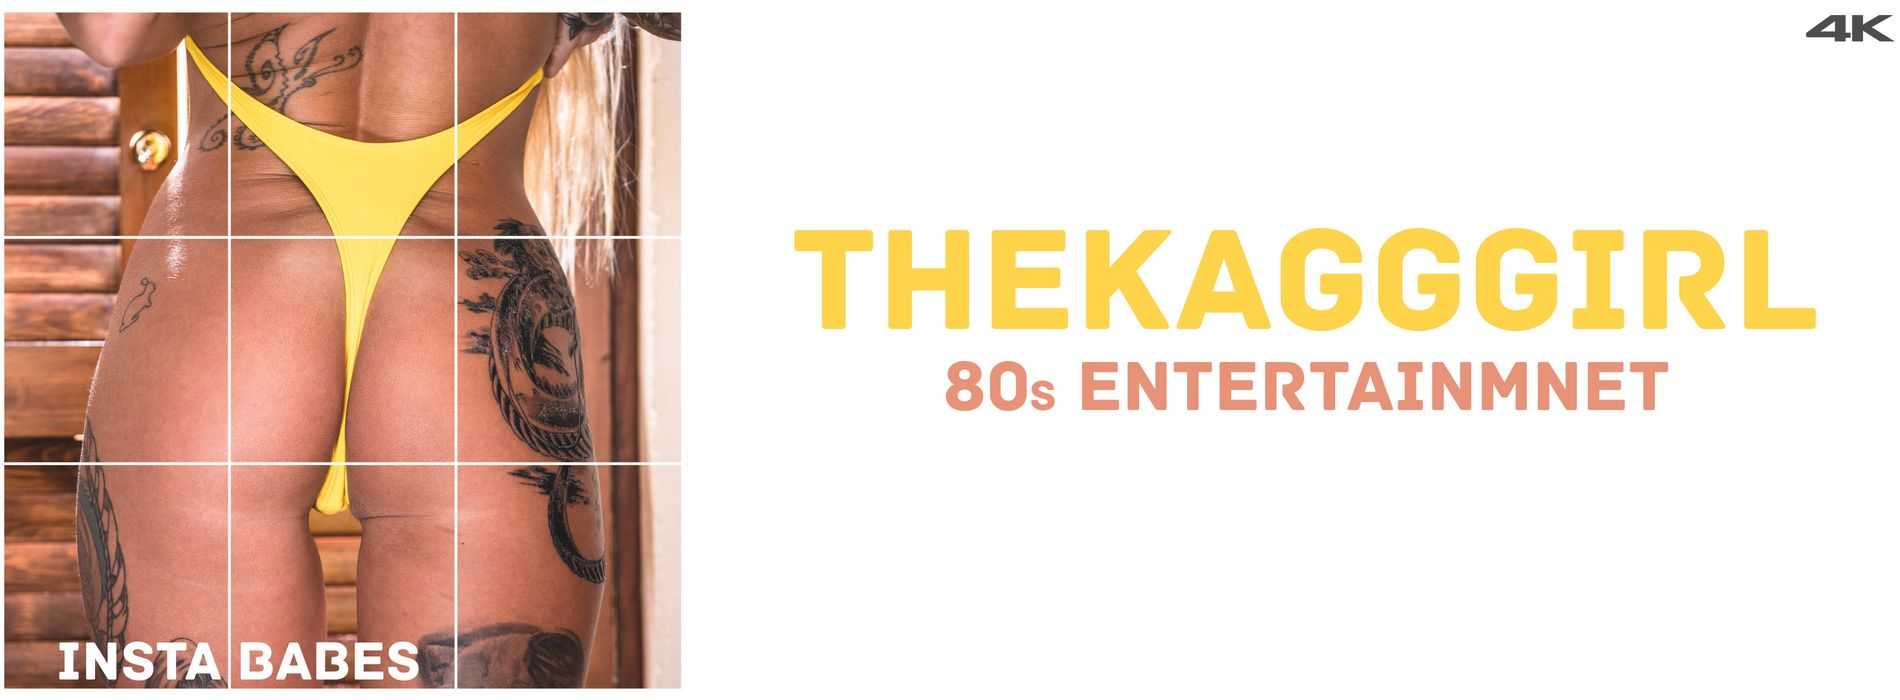 Thekagggirl 80S Entertainment